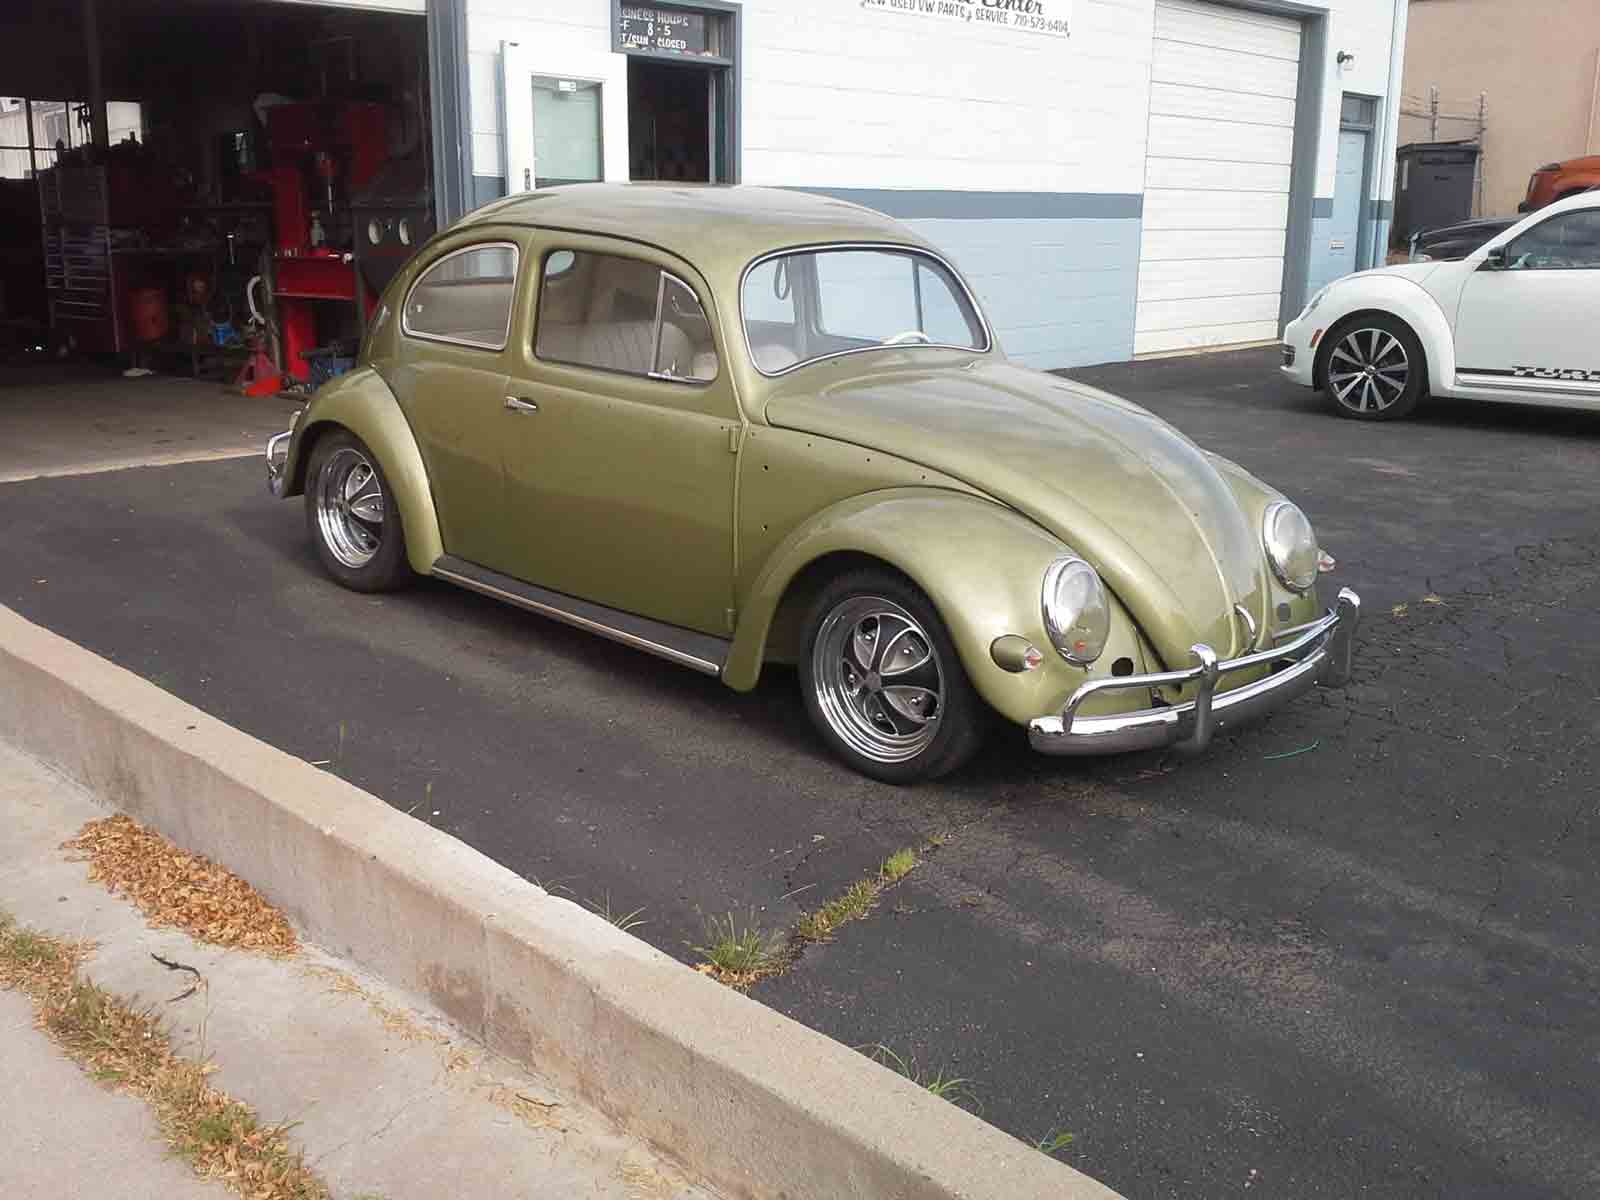 Green car — Classic Car Repair and Service in Colorado Springs, CO